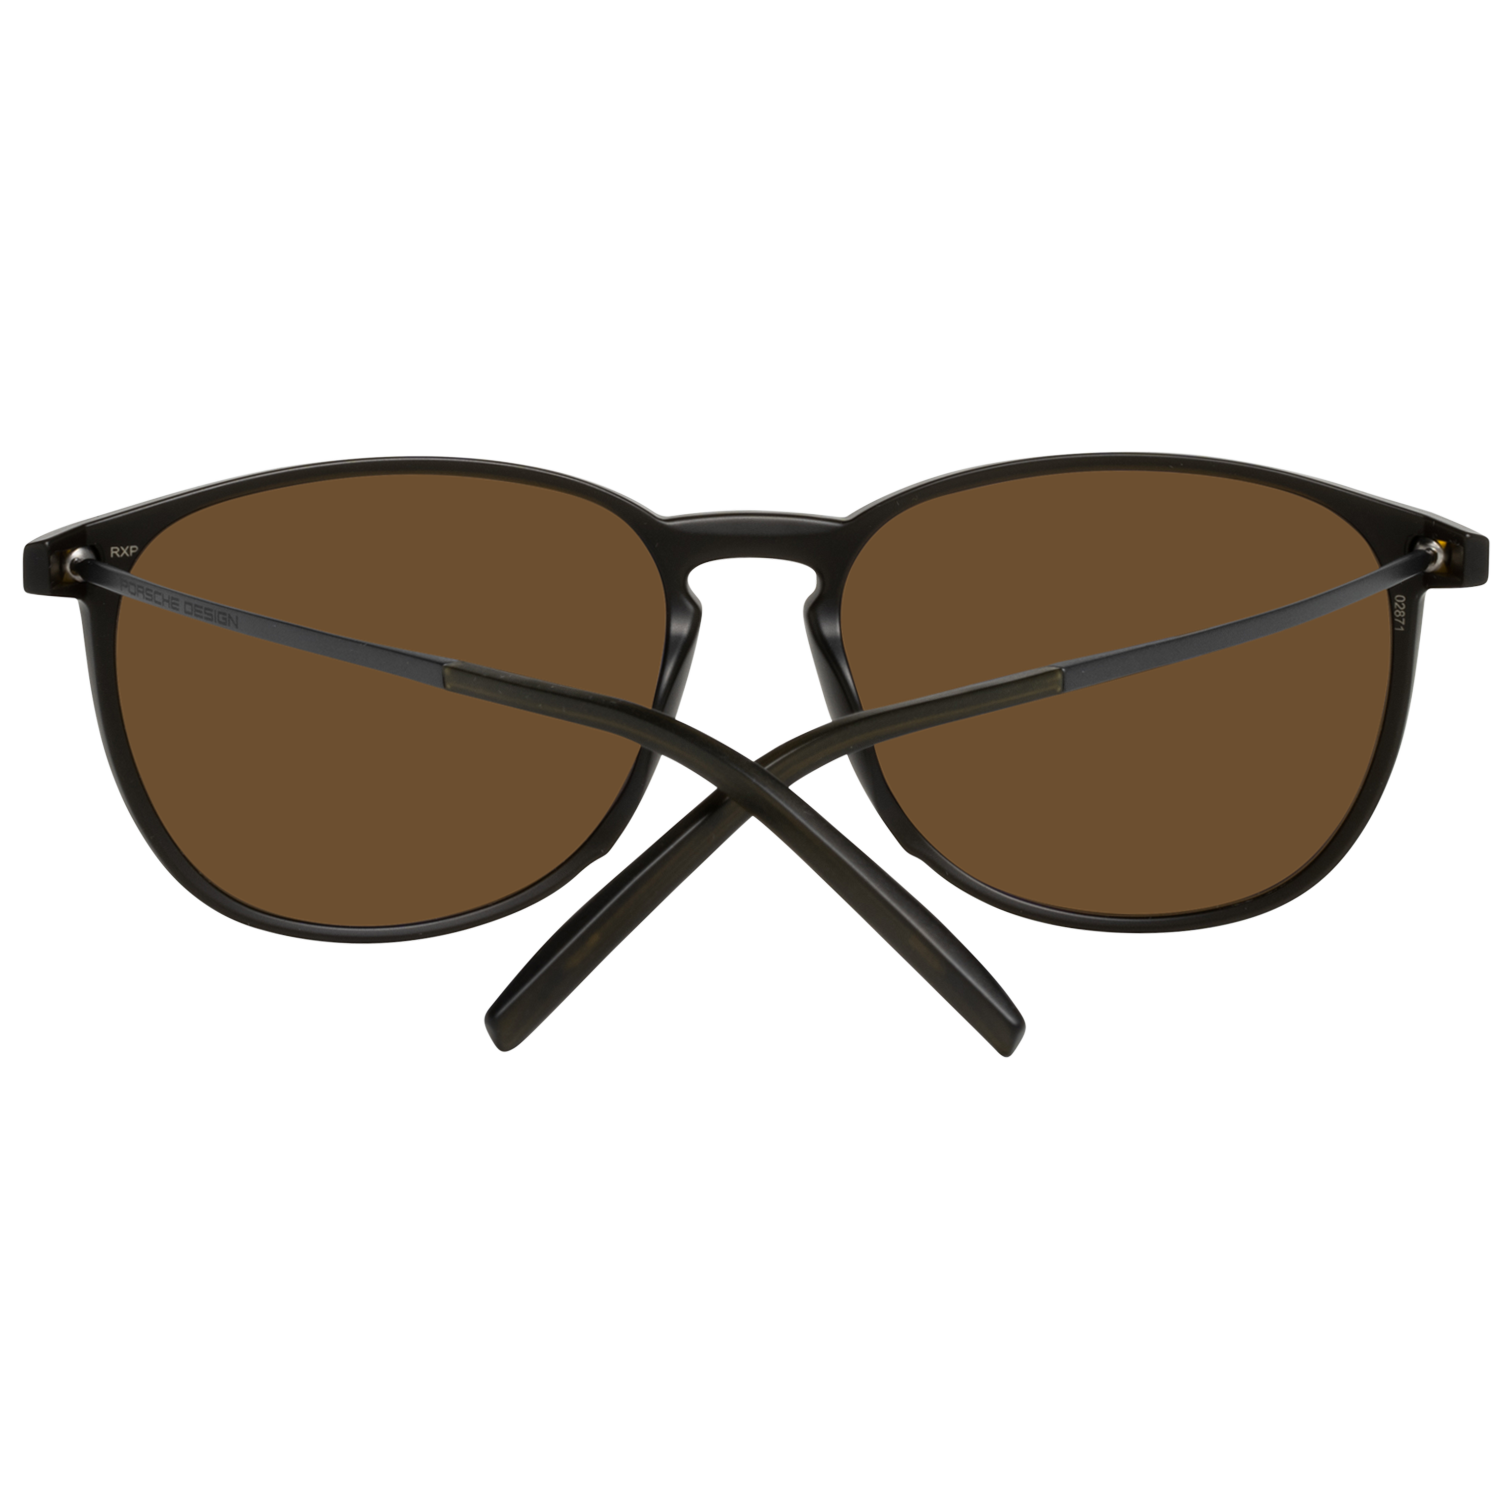 Porsche Design Sunglasses Porsche Design Sunglasses P8683 C 57 Titanium Eyeglasses Eyewear UK USA Australia 